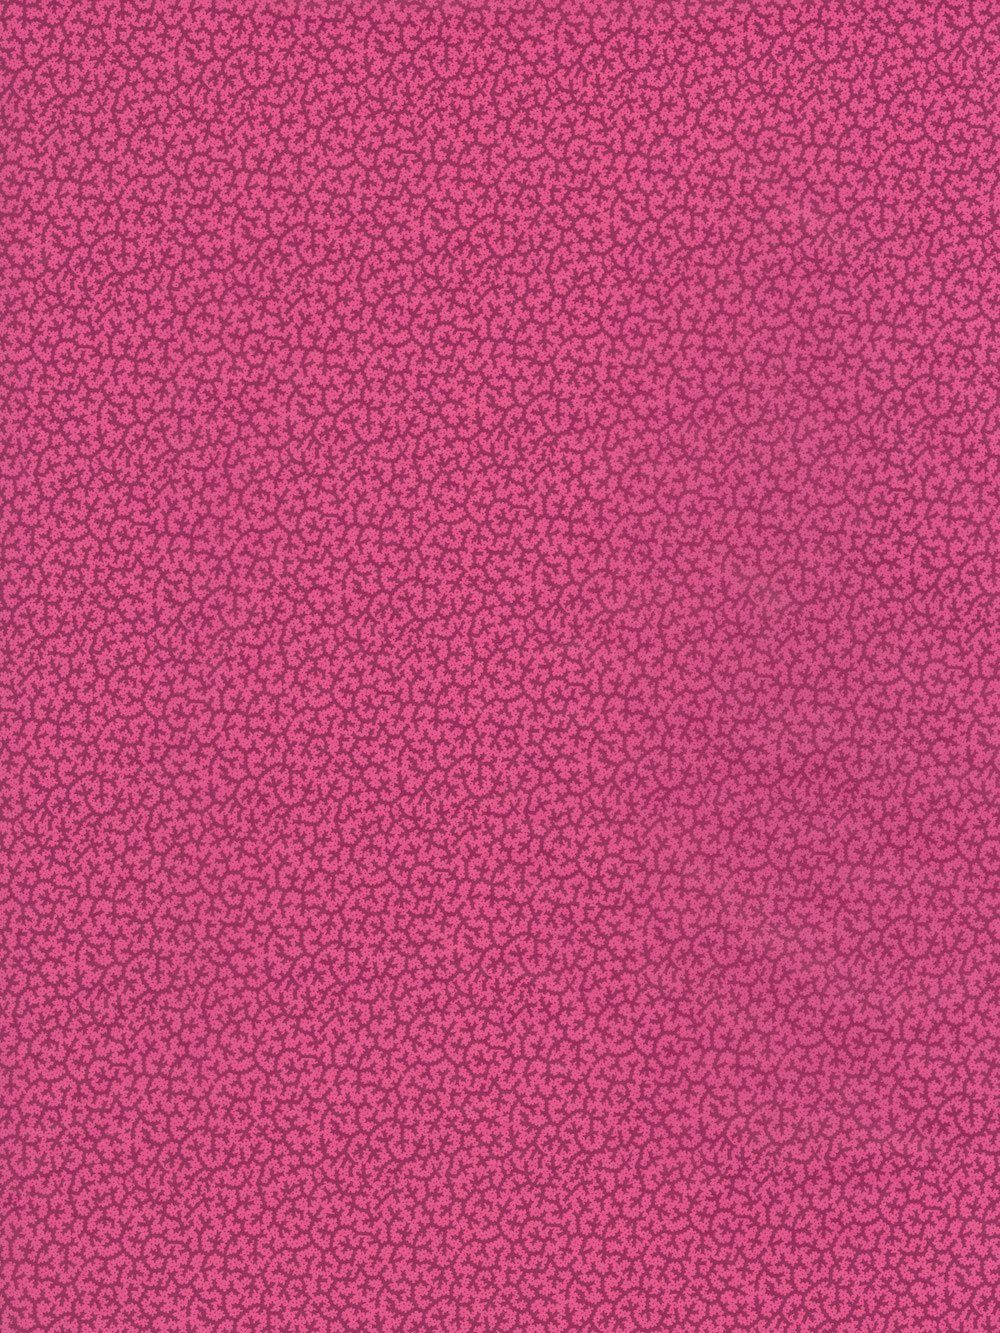 x pink, H-Erzmade Zeichenpapier Décopatch-Papier 30 710 cm 40 Ranken